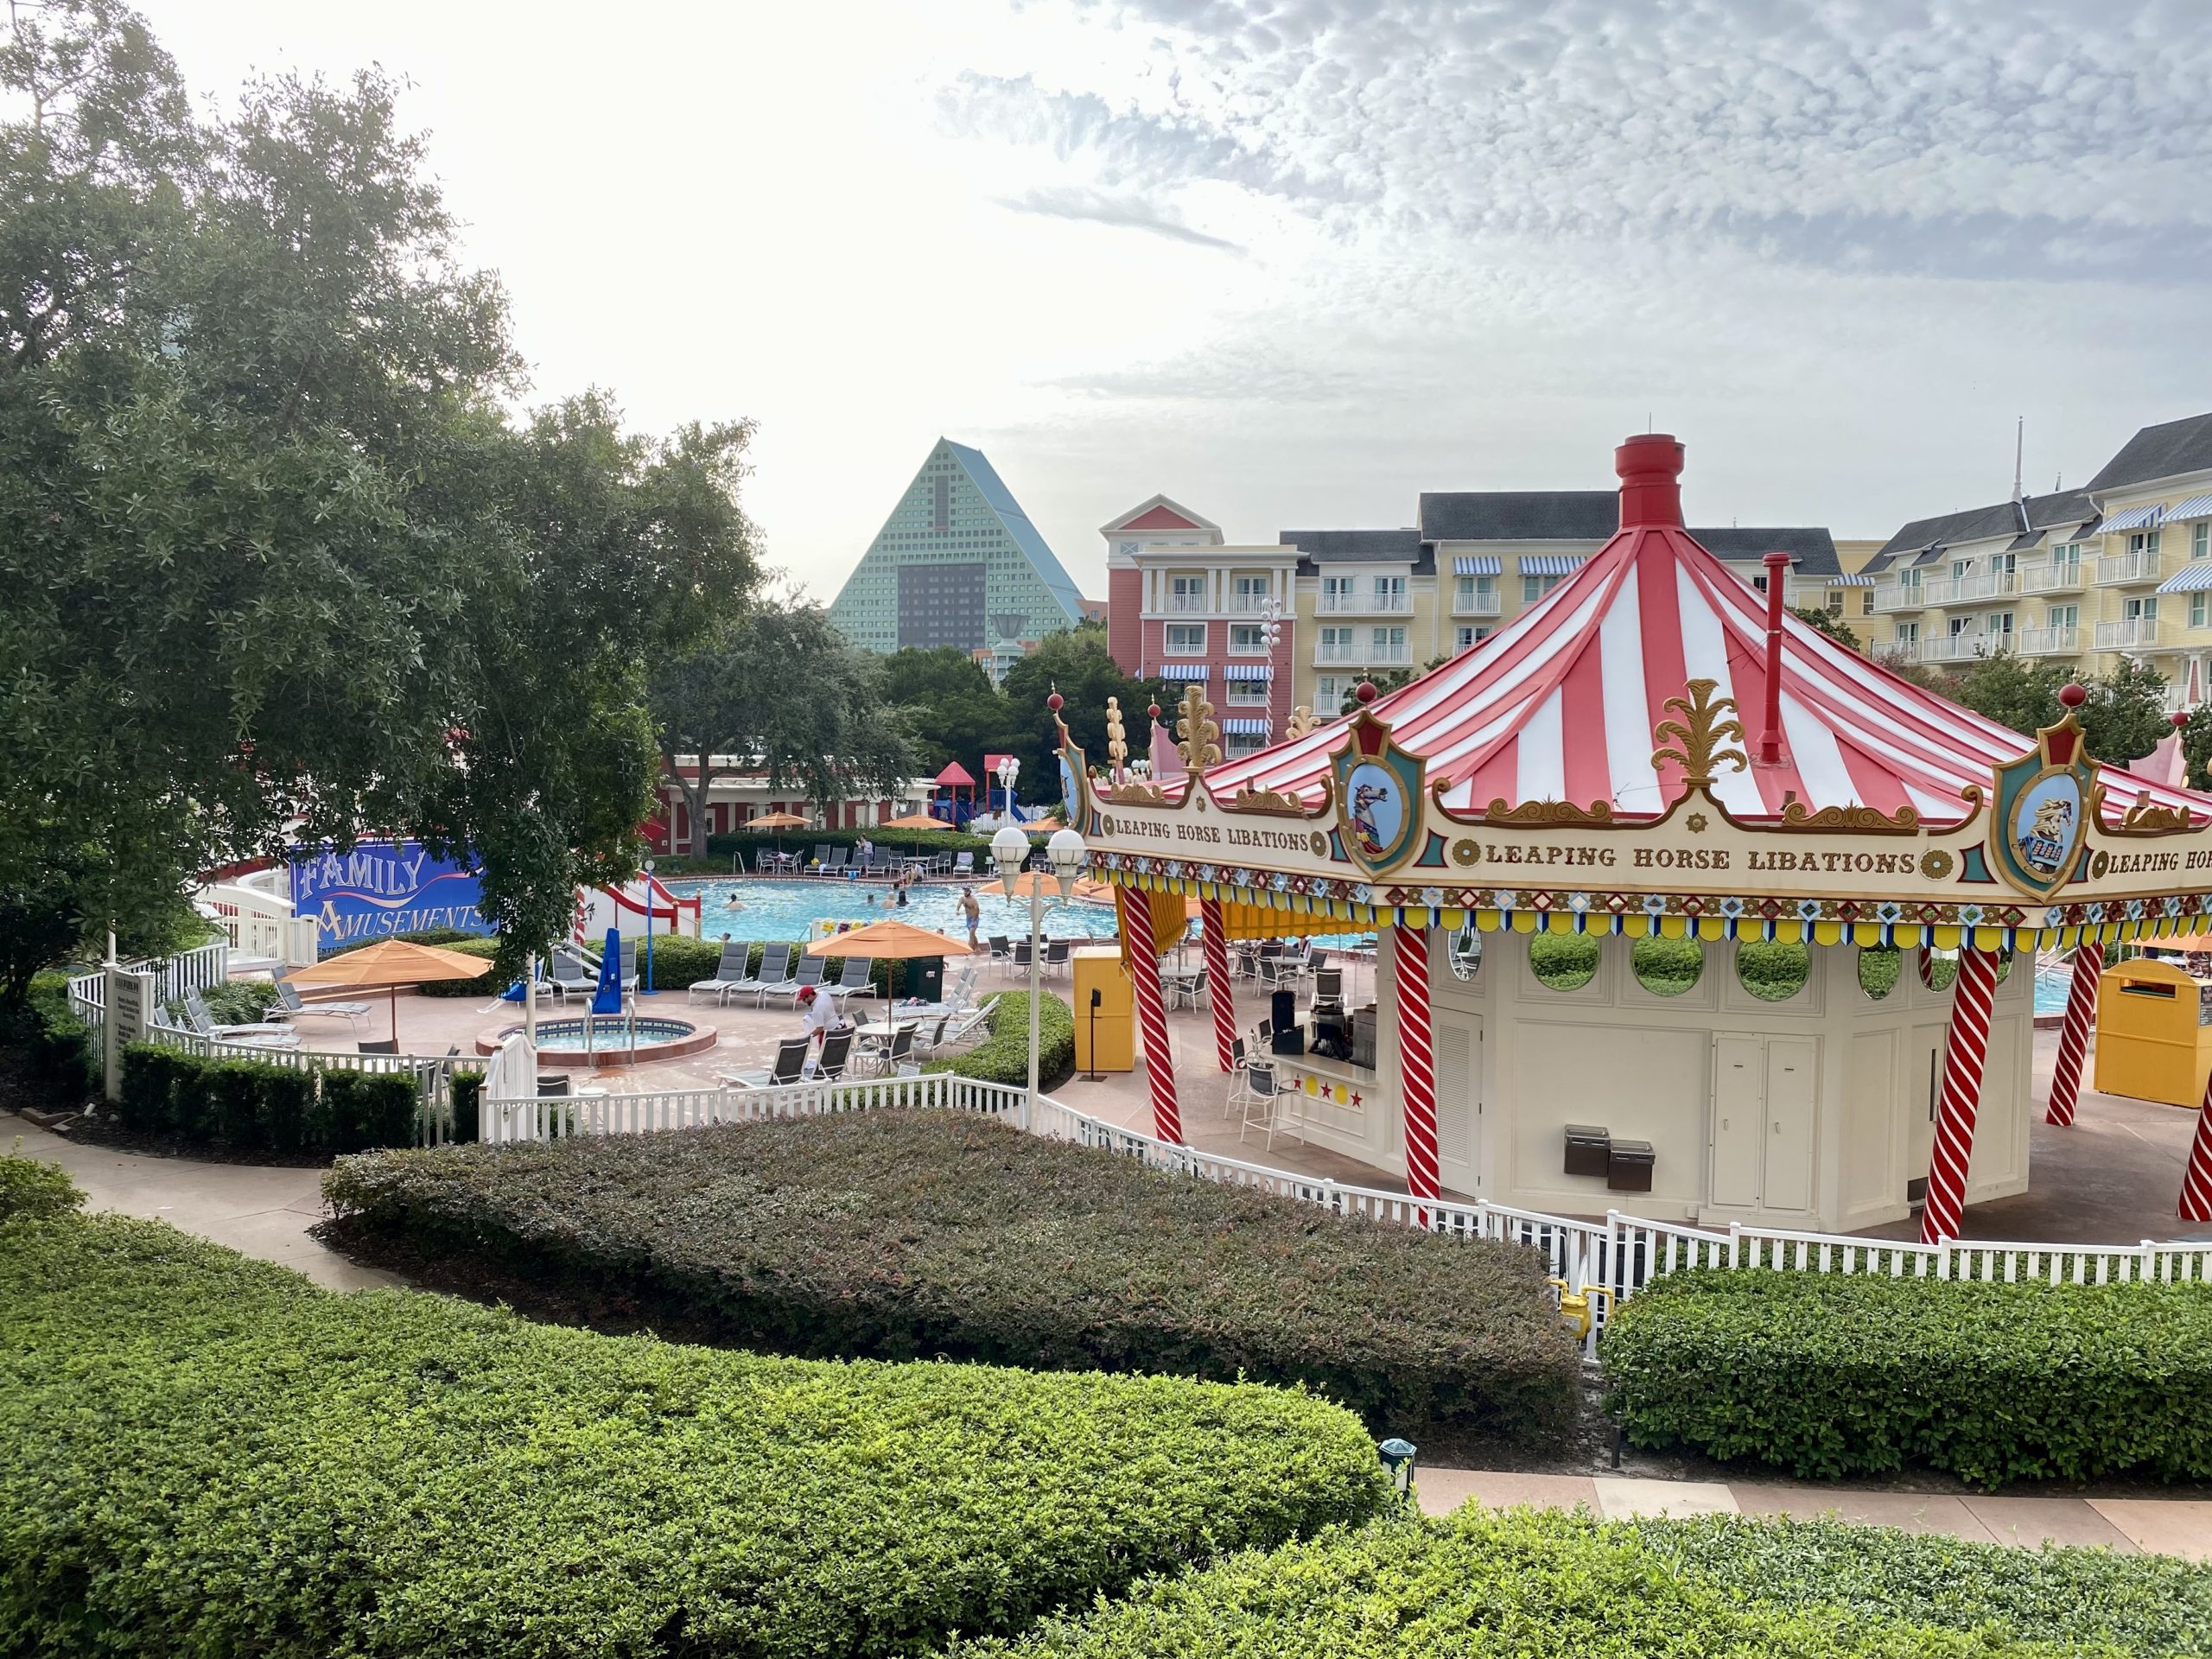 a carousel in a park